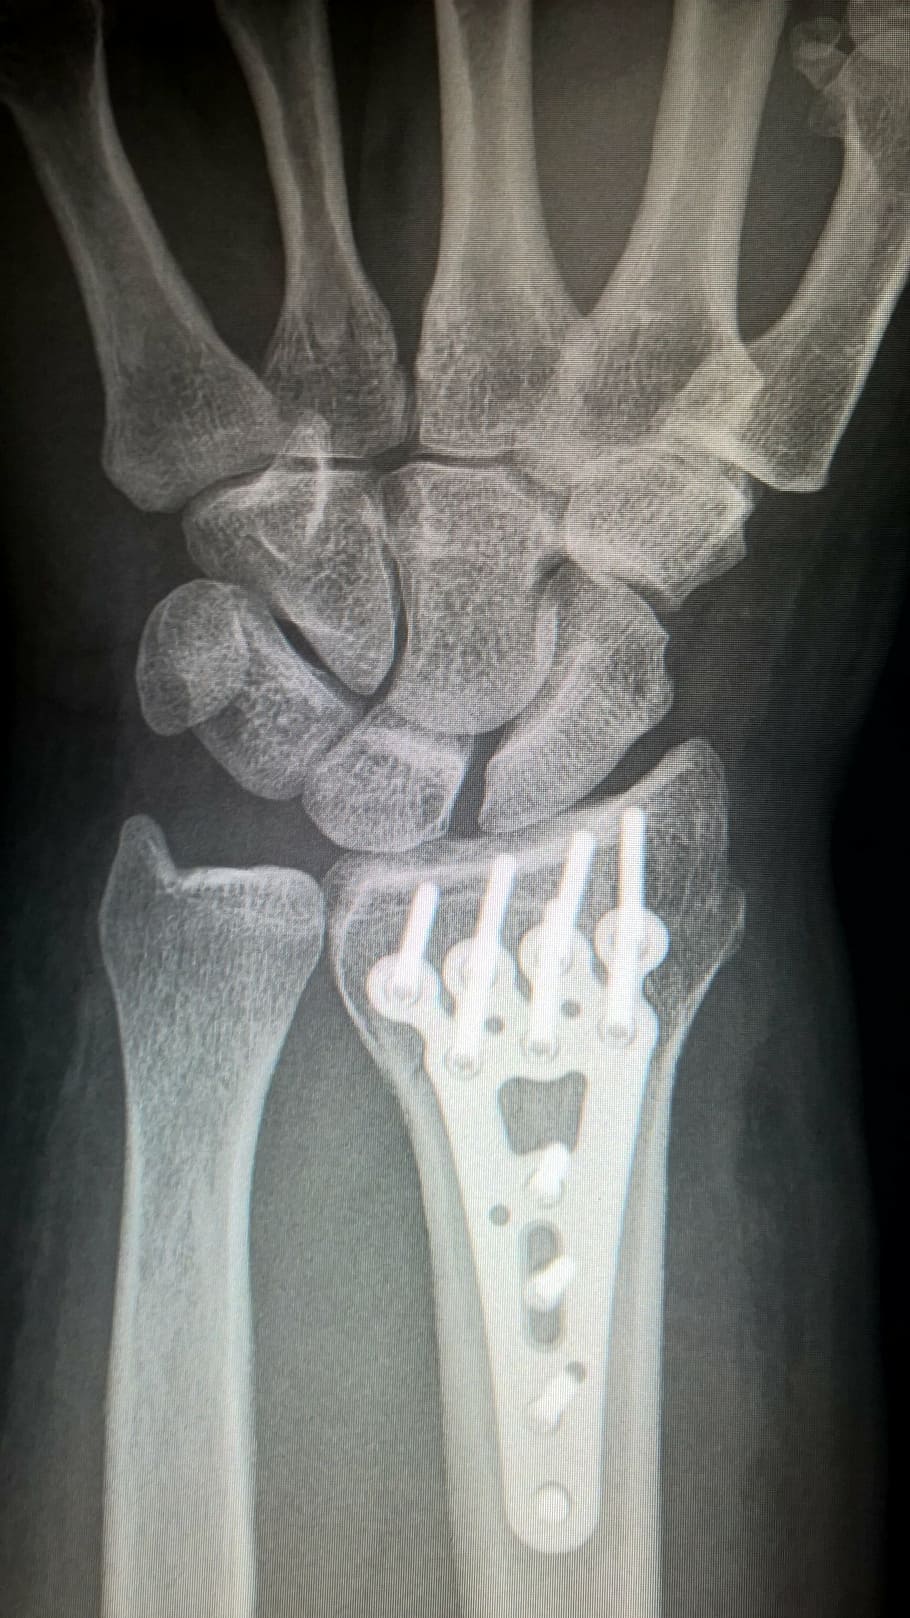 x-ray of arm, broken arm, plate fixation, titanium plate, fracture of radius, wrist, surgery, trauma surgery, x ray image, bone